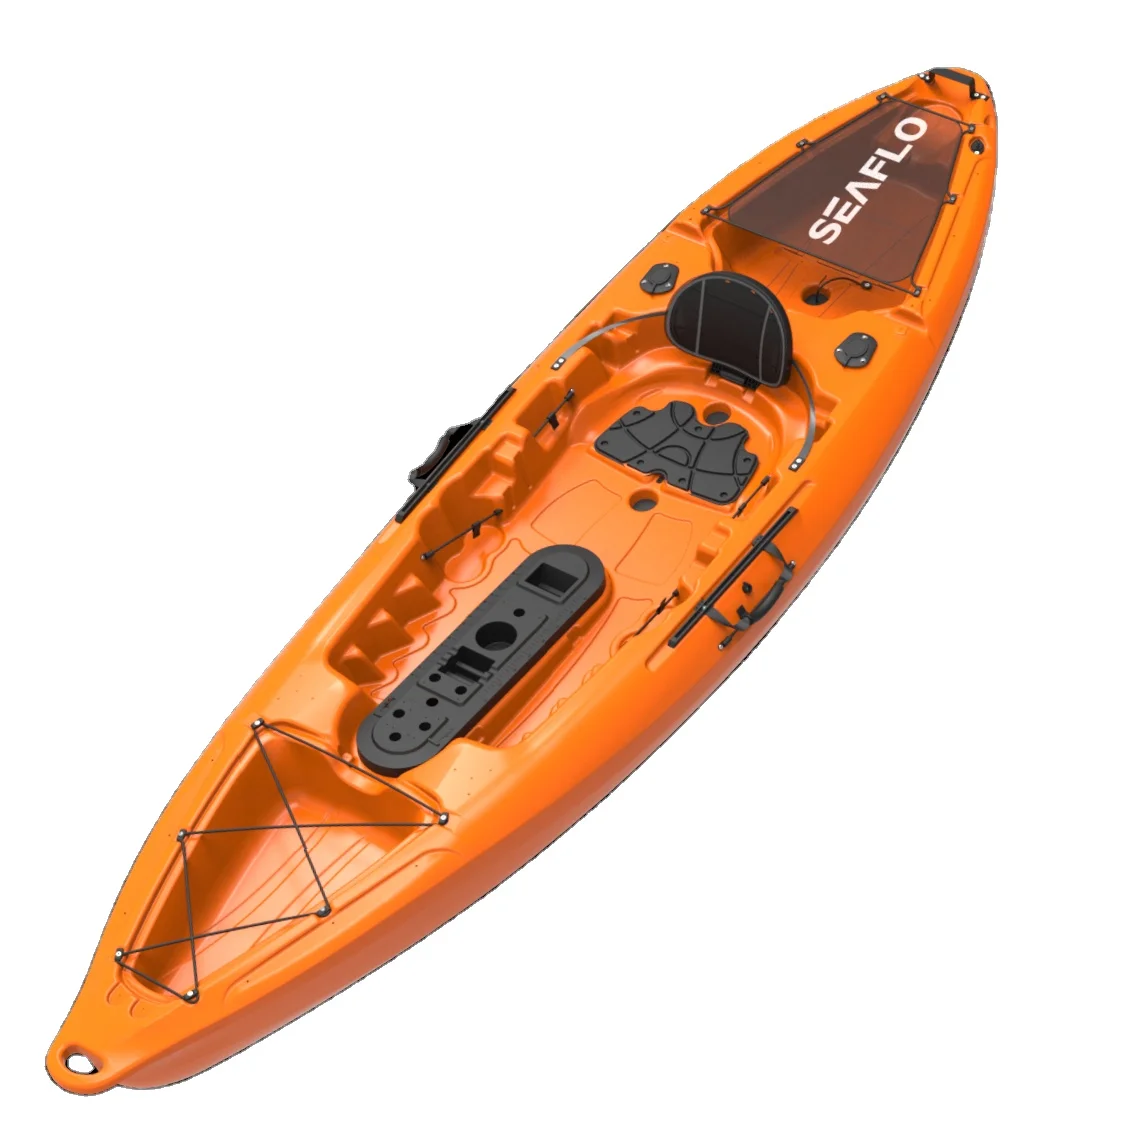 seaflo bfa106-a new style fishing kayak